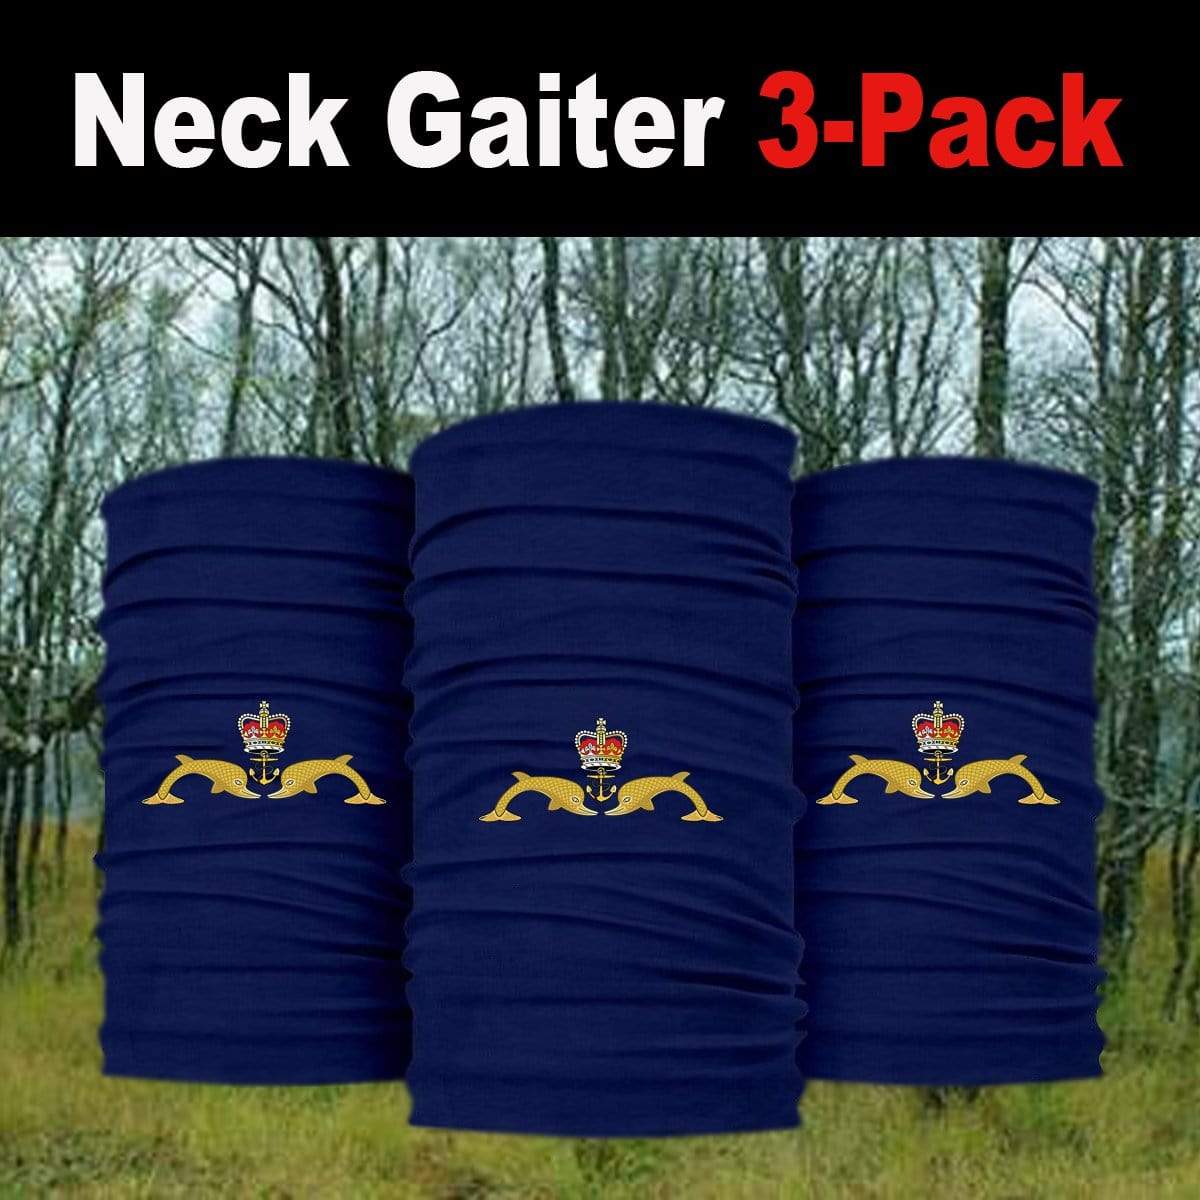 neck gaiter Bandana 3-Pack - Submariner Neck Gaiter 3-Pack Submariner Neck Gaiter/Headover 3-Pack